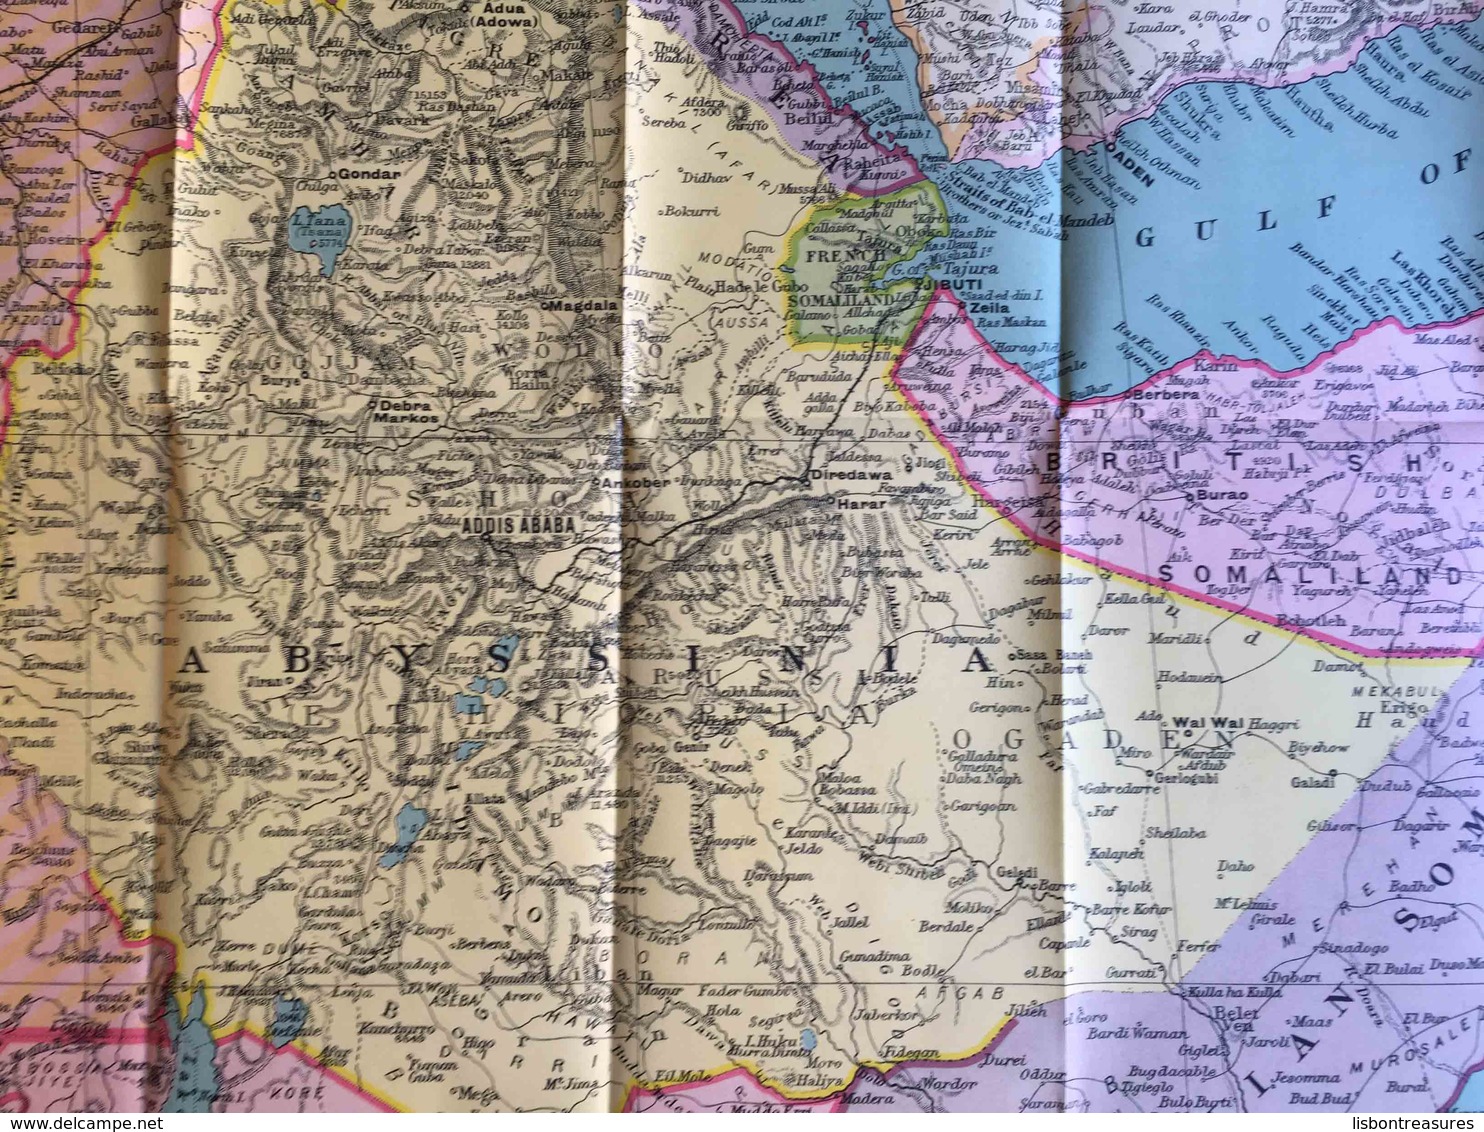 RARE ANTIQUE AFRICA ETHIOPIA ERITREIA " THE DAILY TELEGRAPH MAP OF ABYSSINIA" MAP BOOKLET